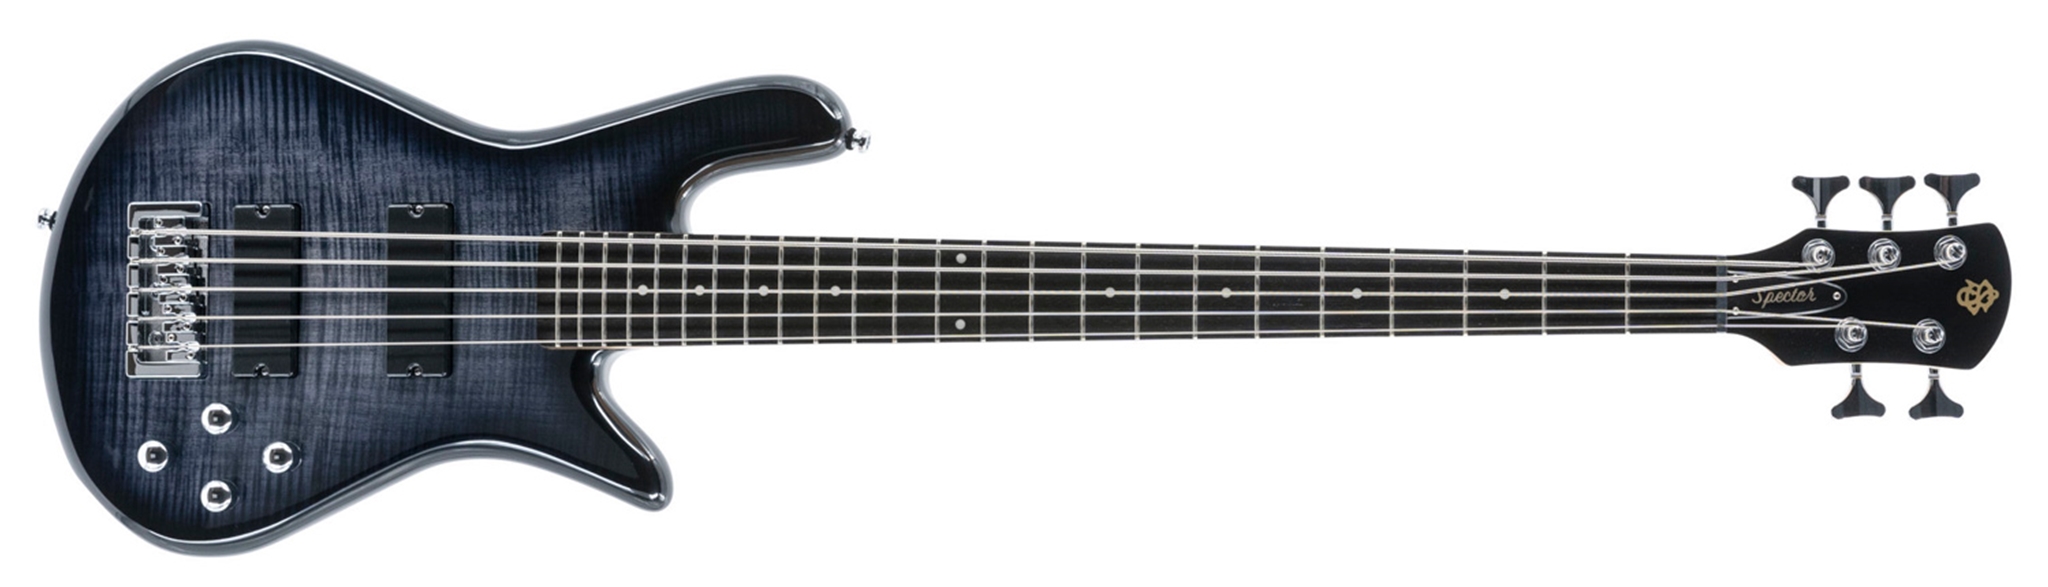 Spector   Legend 5 Standard Black Stain Gloss LG5STBKS 5-String Electric Bass Guitar  